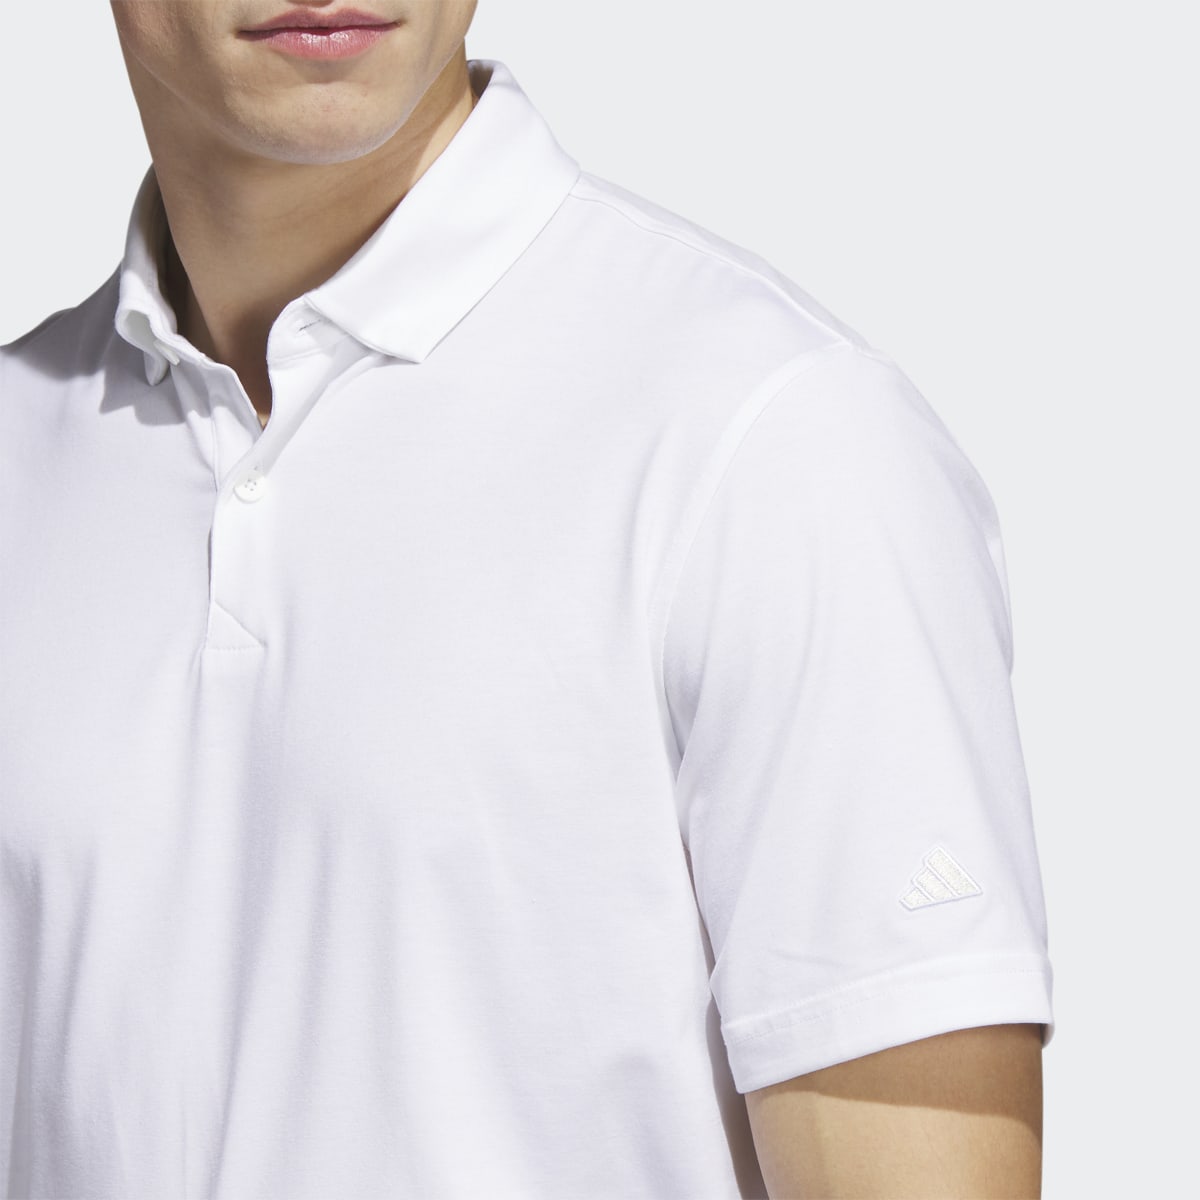 Adidas Go-To Polo Shirt. 6